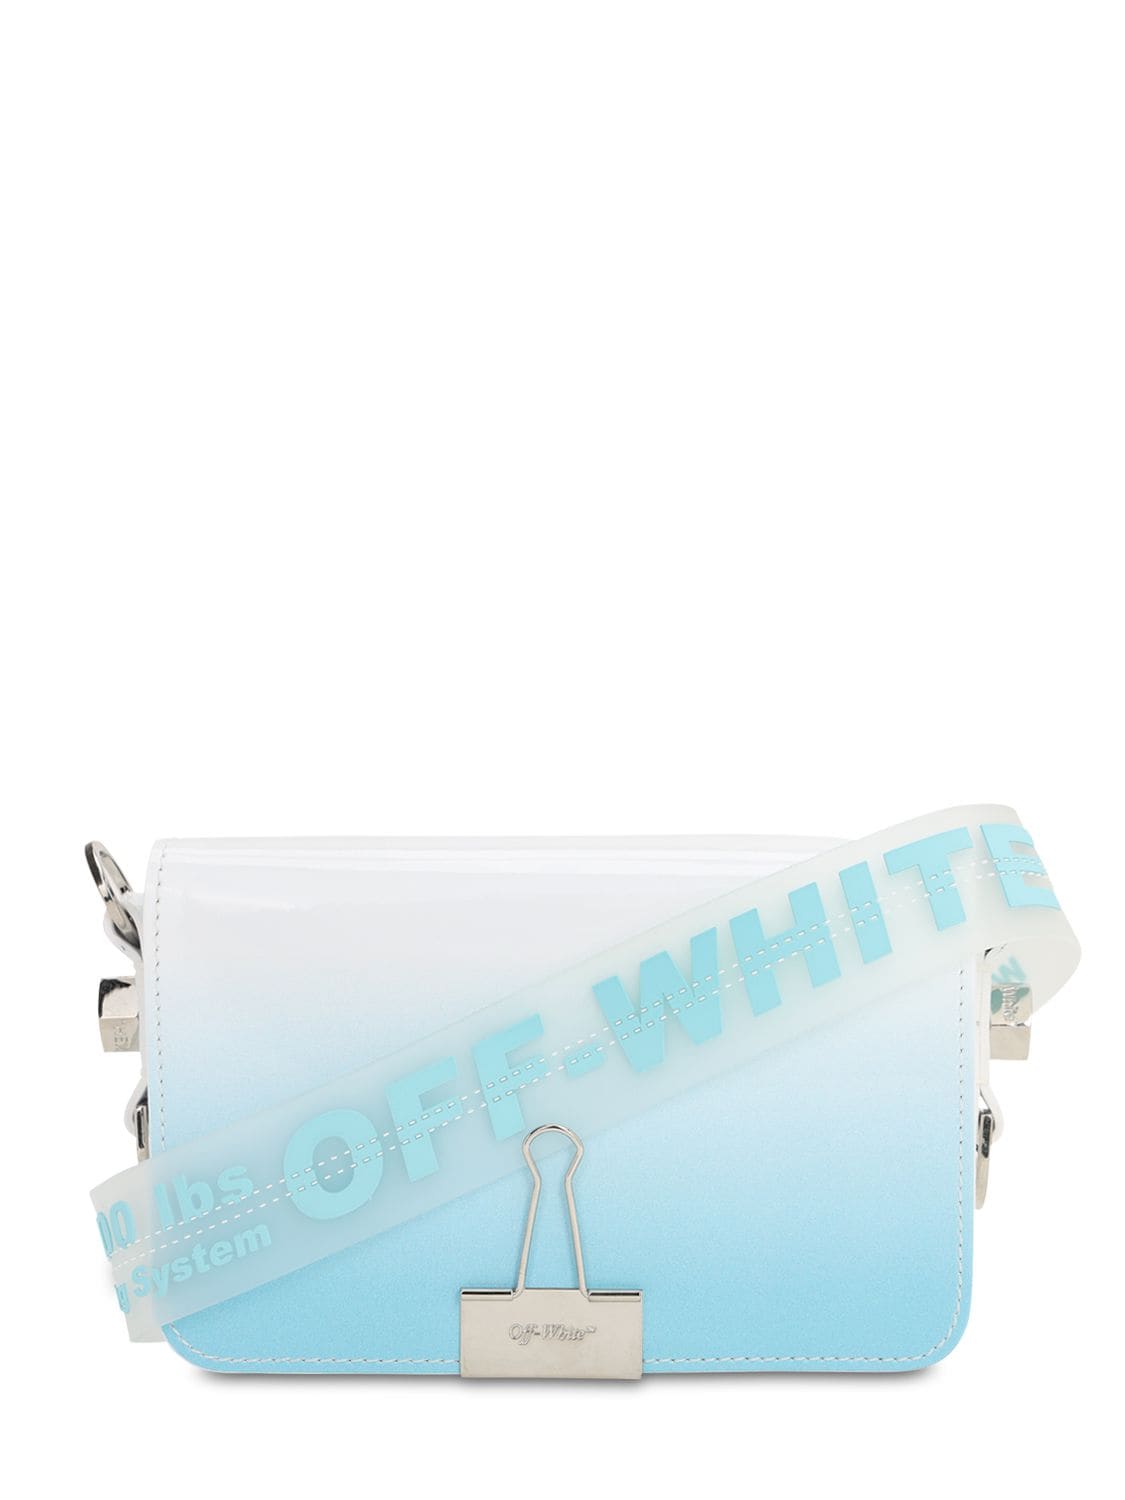 OFF-WHITE MINI DEGRADÉ LEATHER SHOULDER BAG,71IIUD009-MZEWMA2